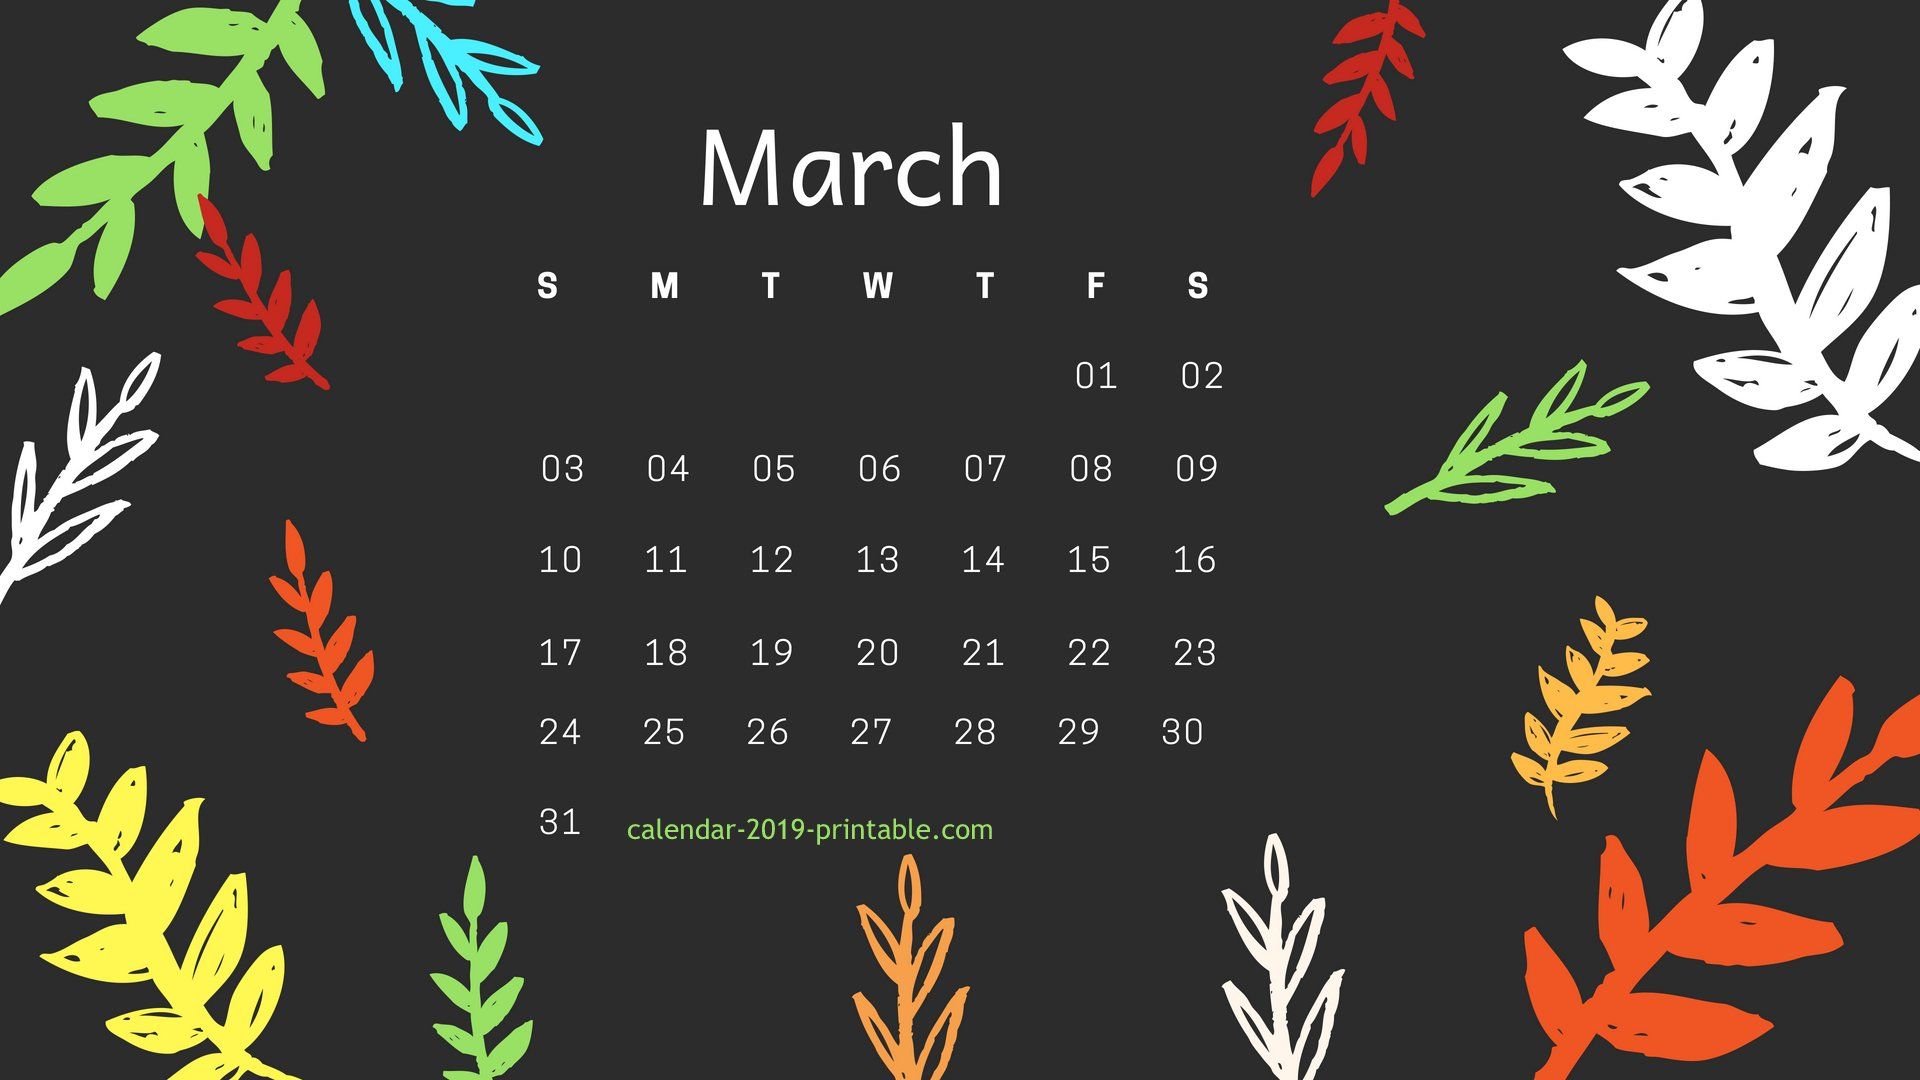 March HD Calendar Wallpaper In